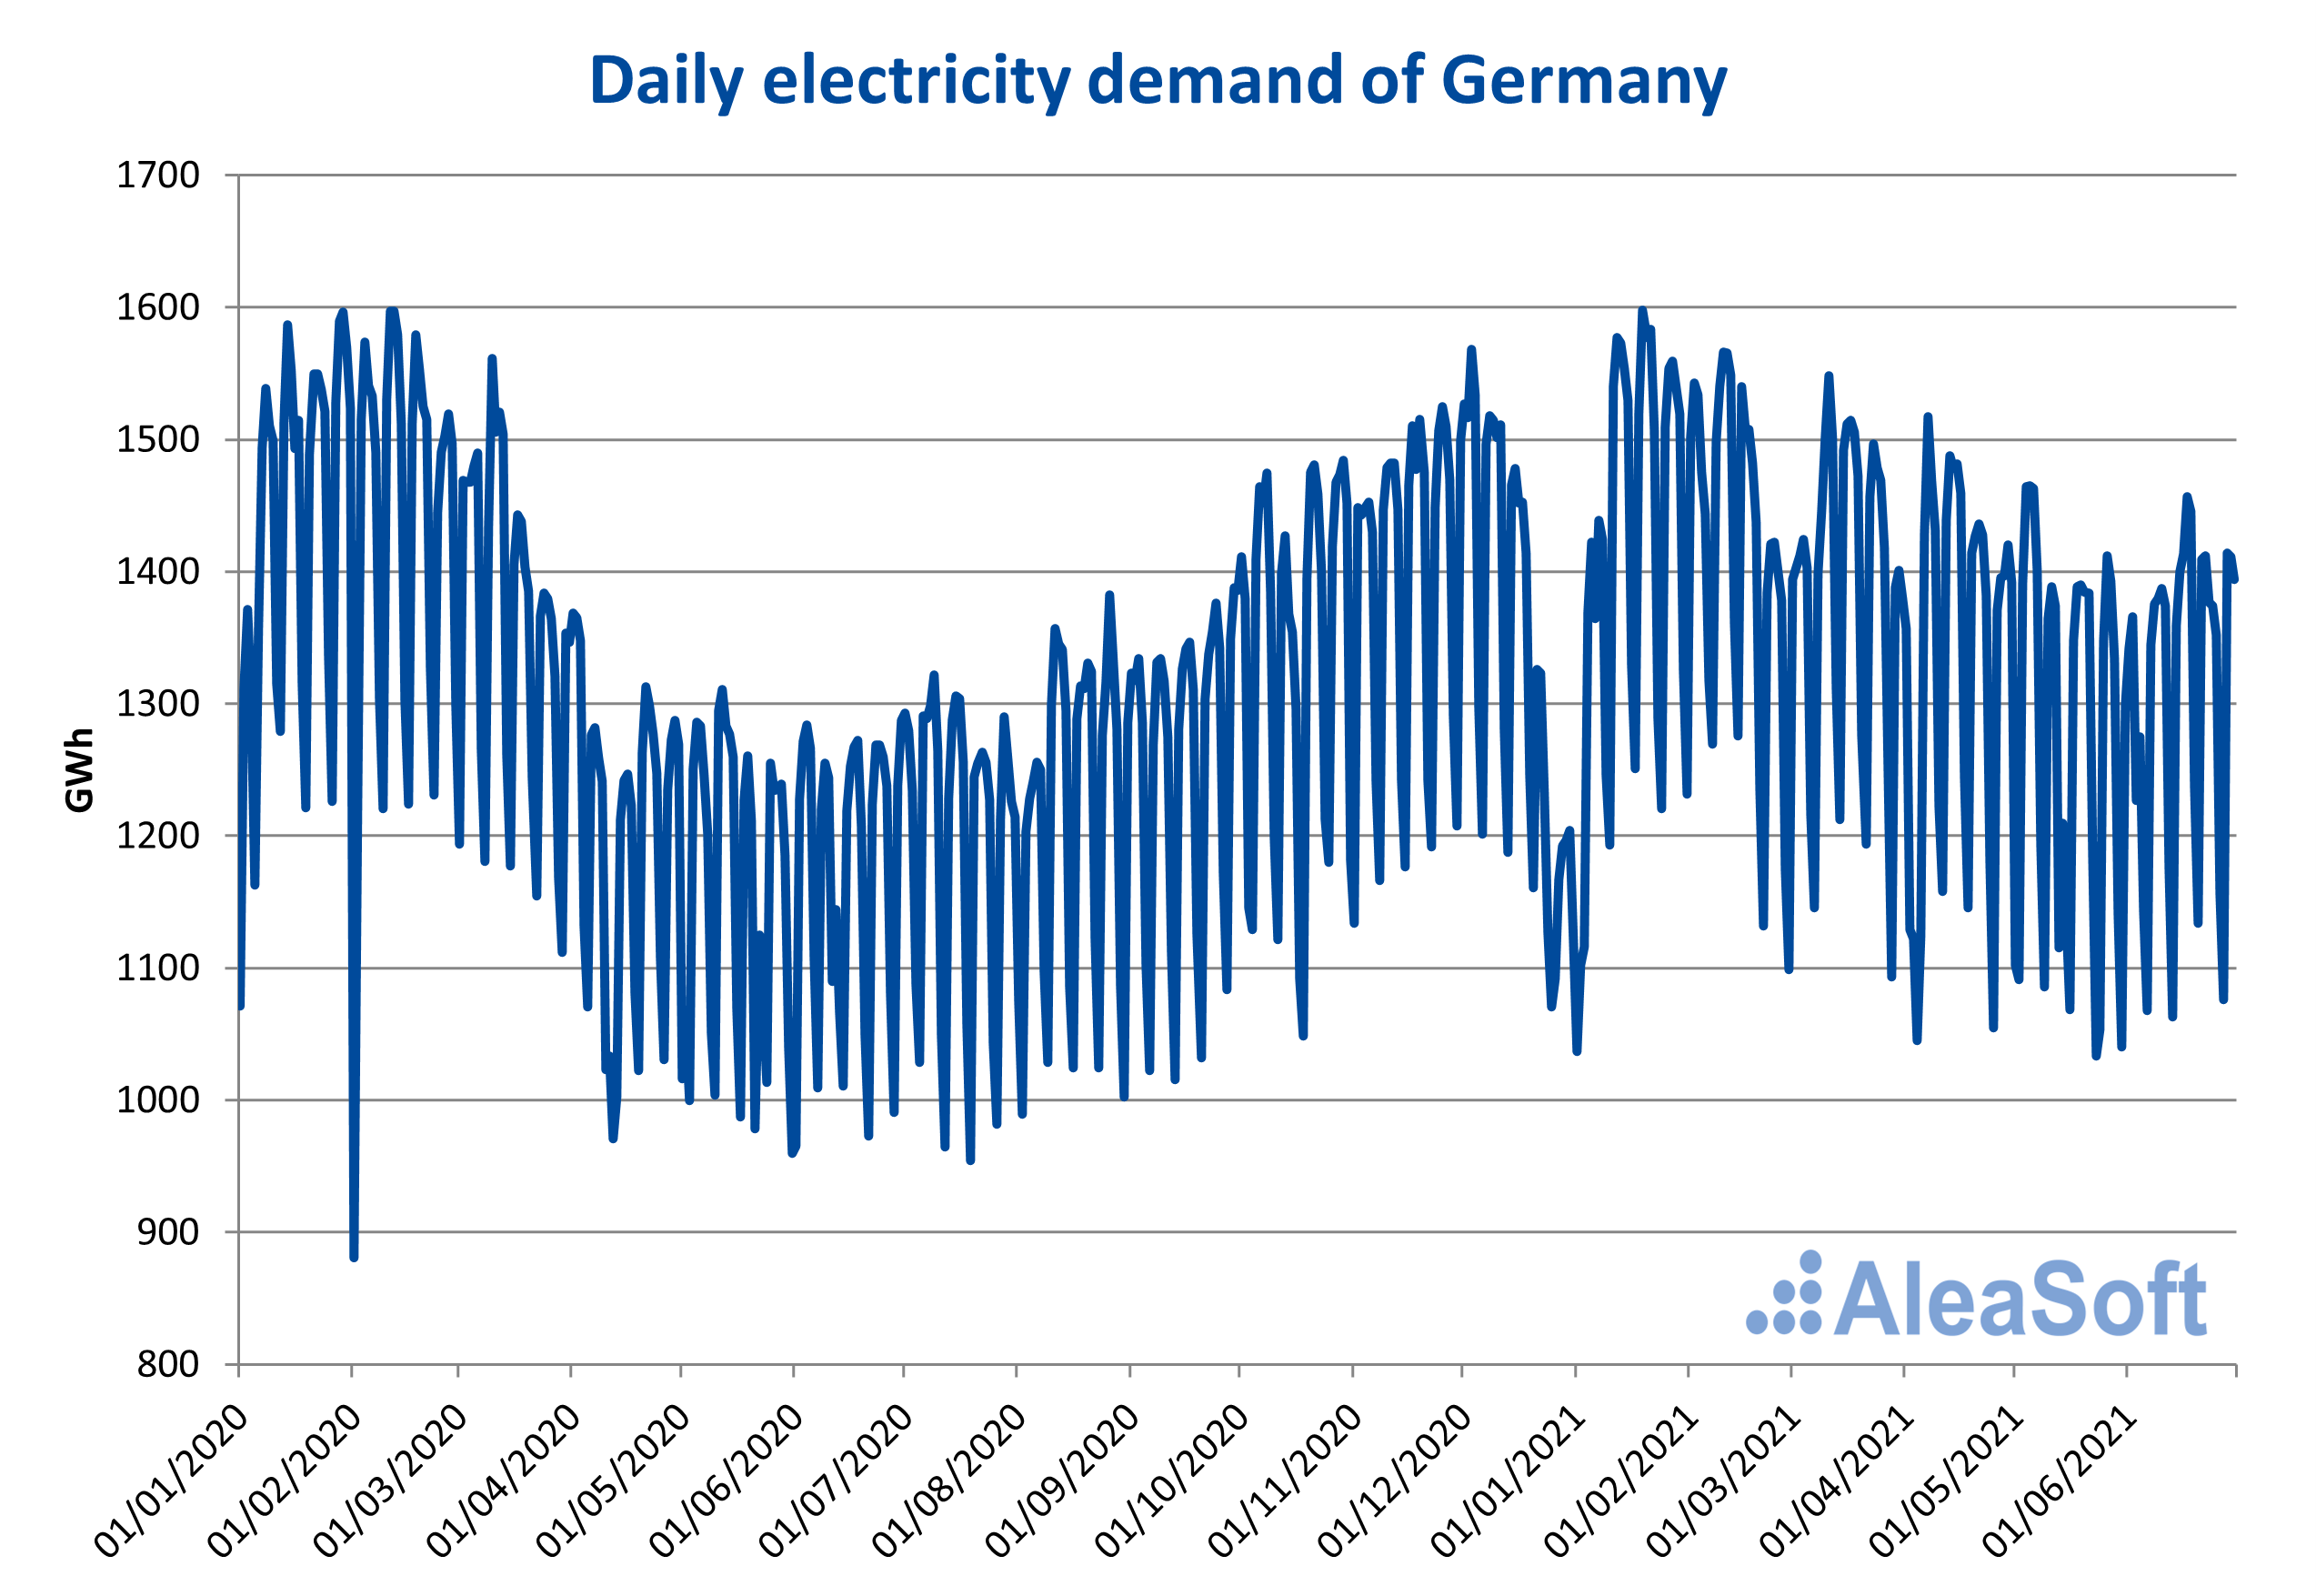 AleaSoft - Daily electricity demand germany